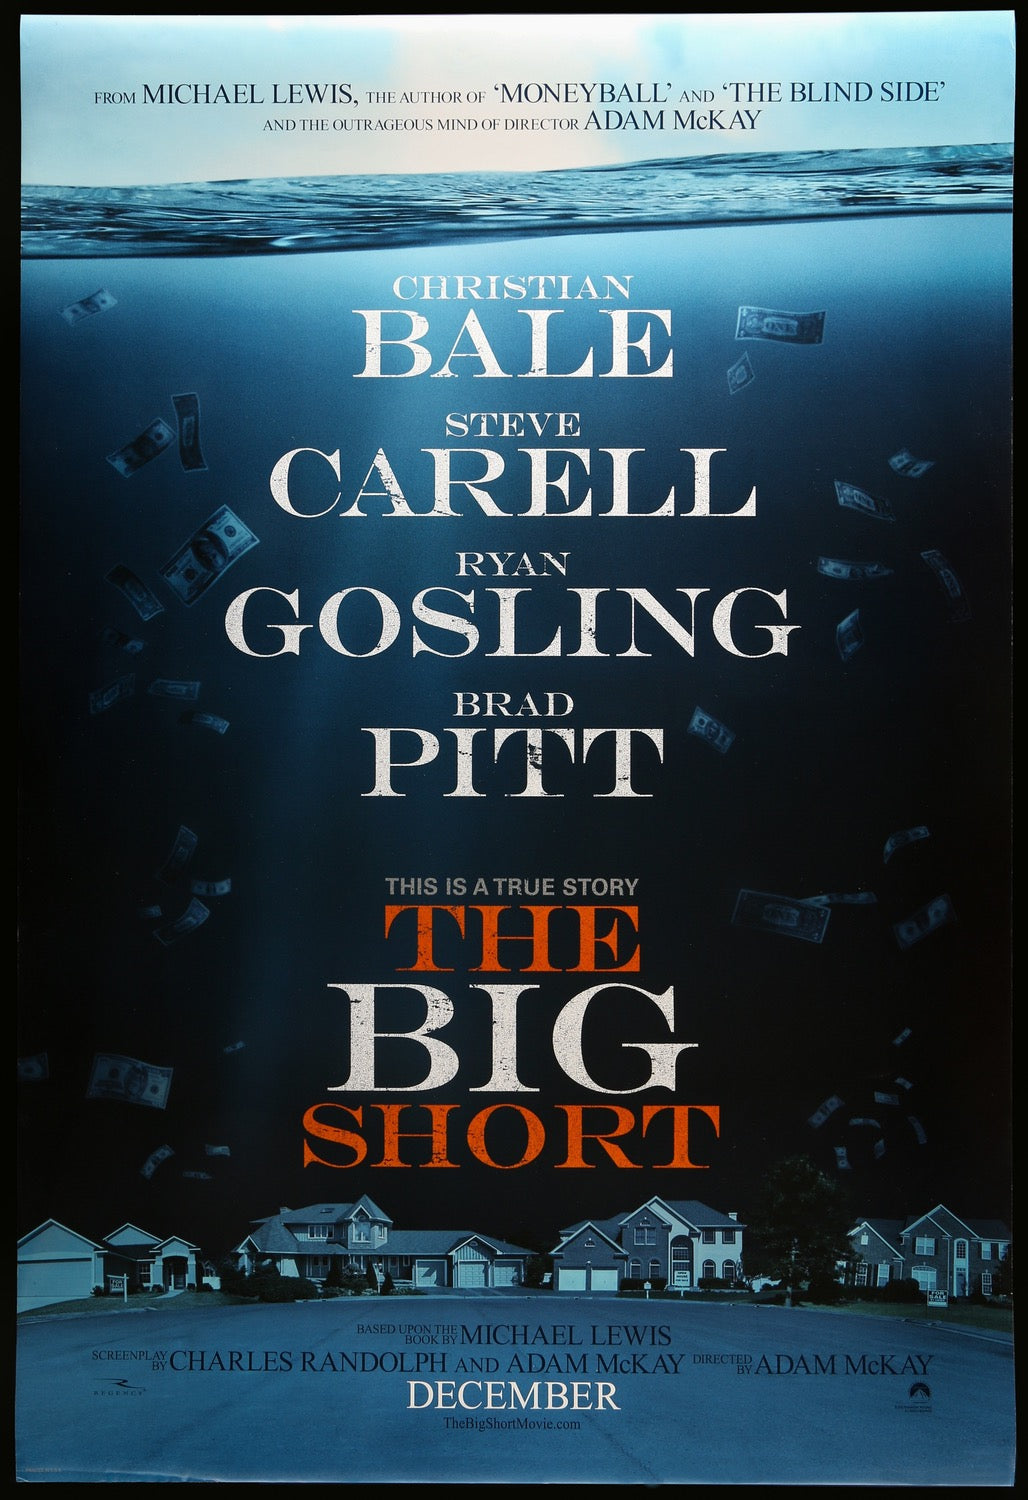 Big Short (2015) original movie poster for sale at Original Film Art